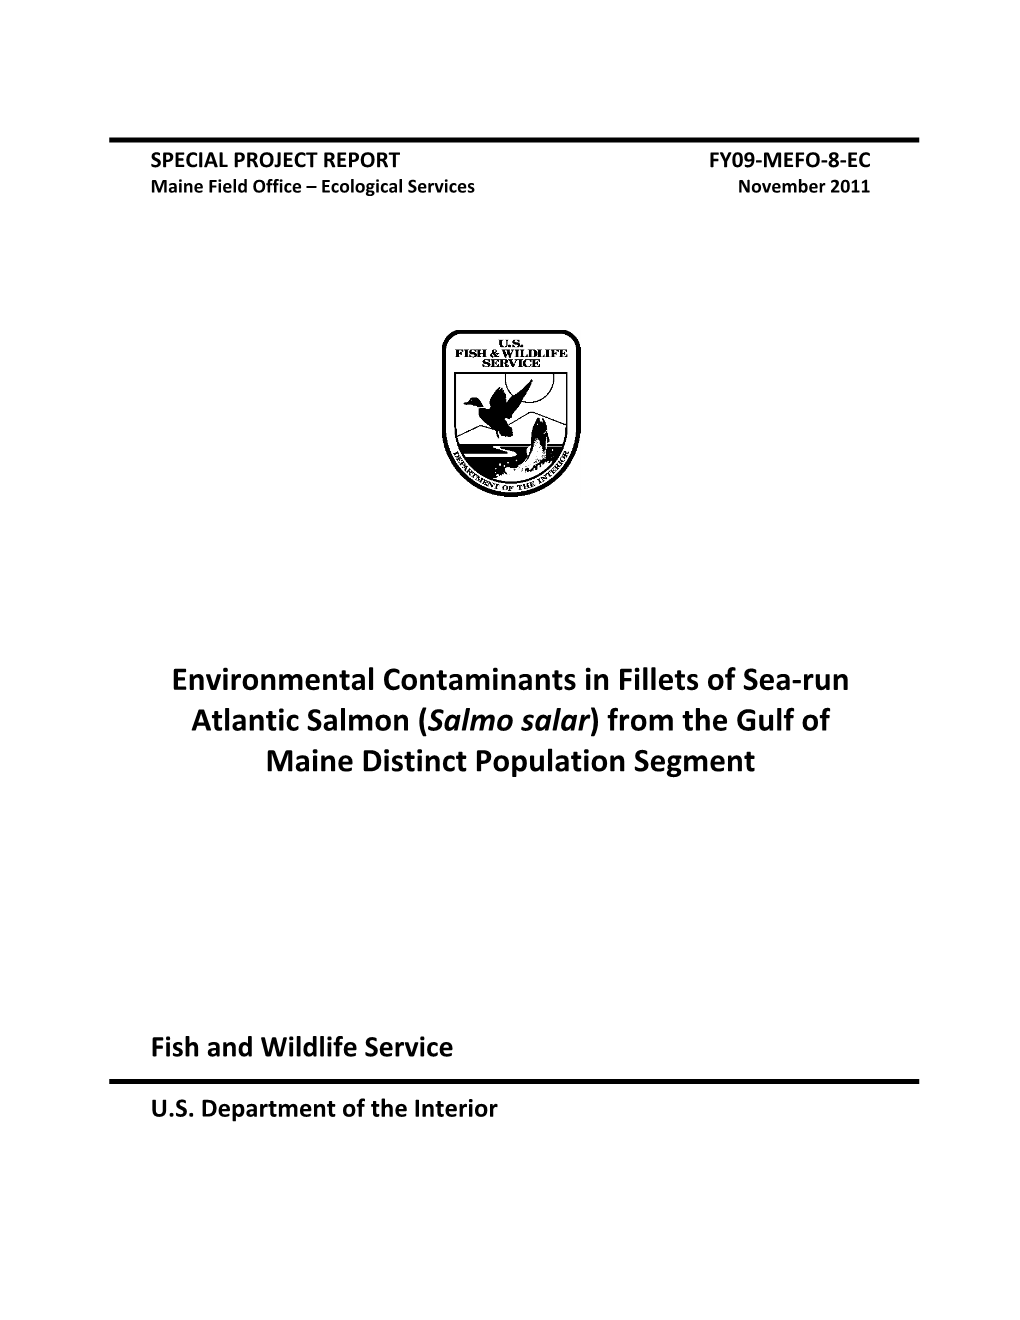 Environmental Contaminants in Fillets of Sea-Run Atlantic Salmon